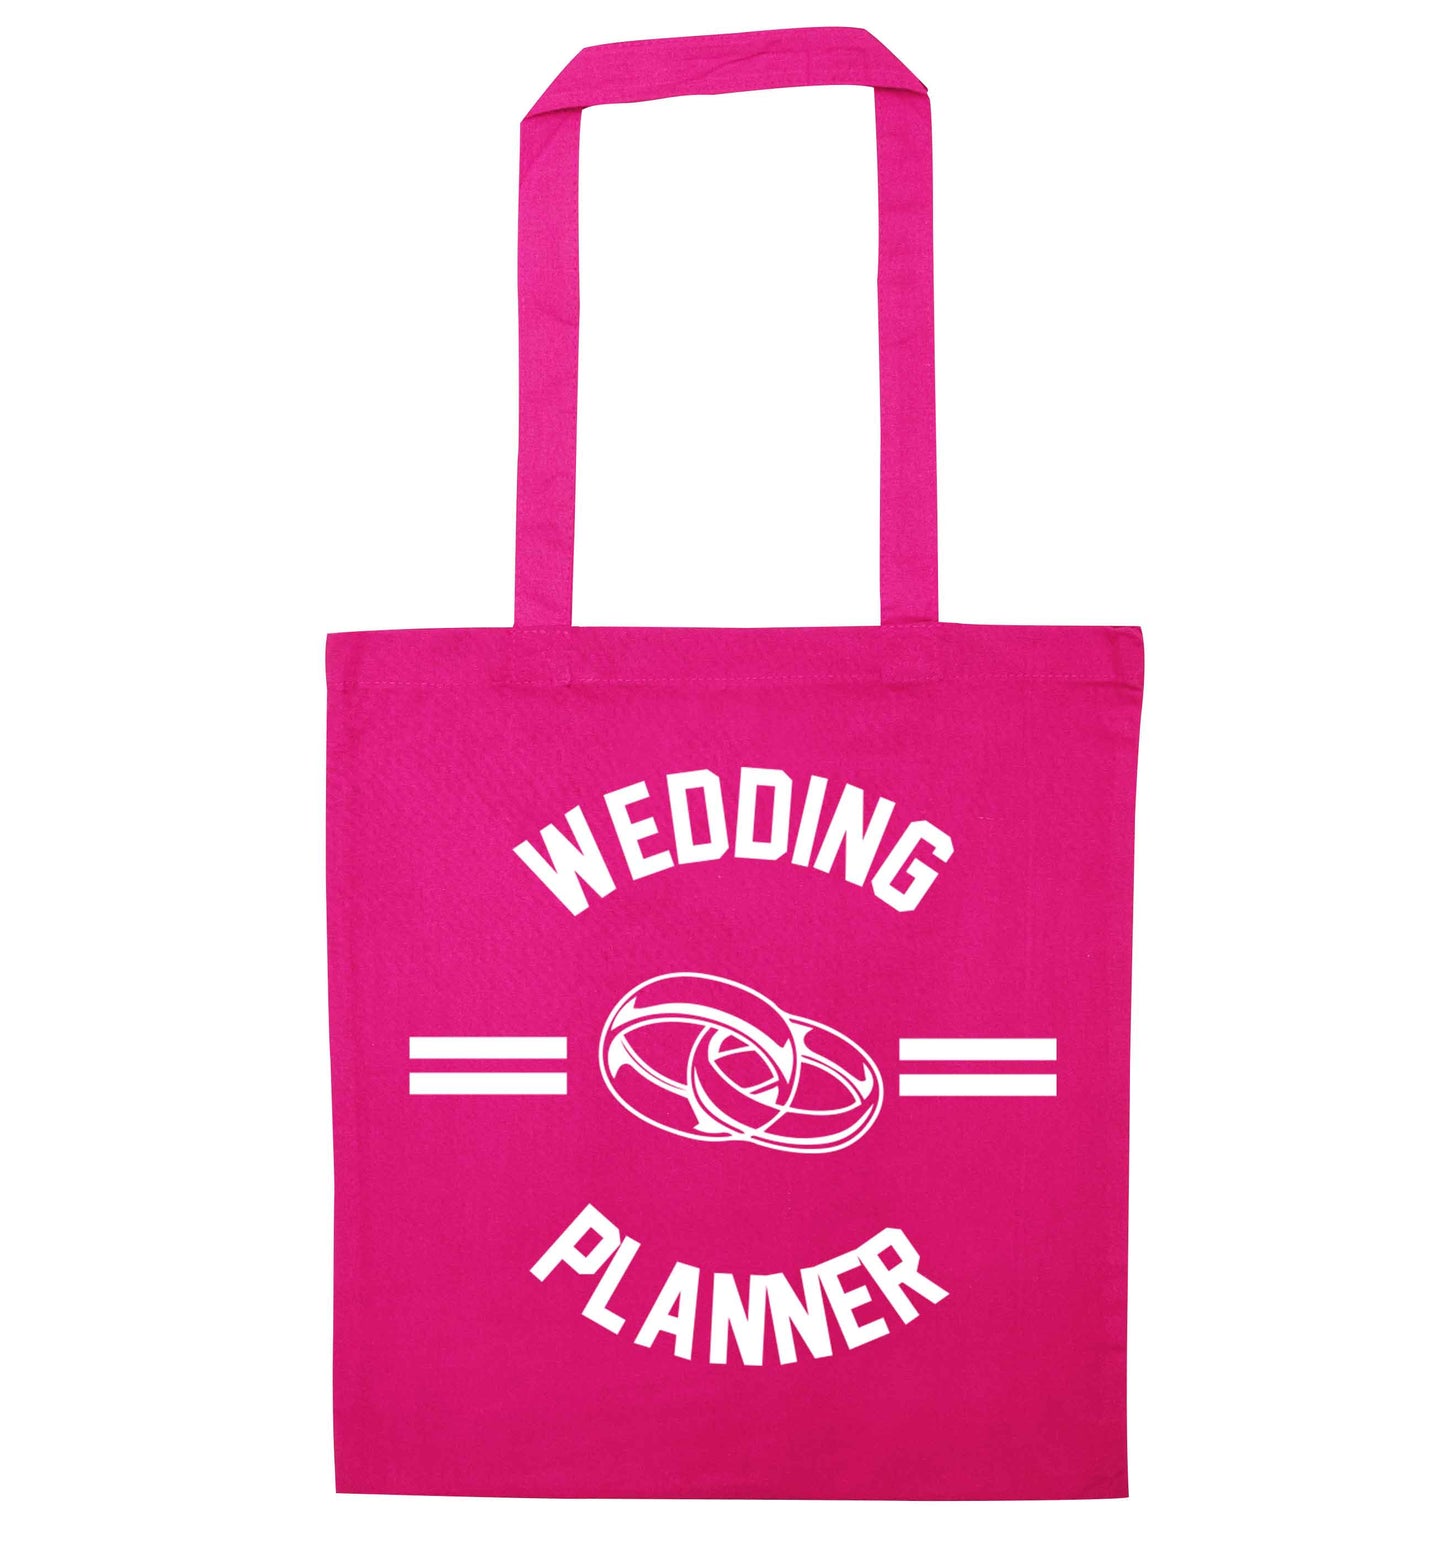 Wedding planner pink tote bag